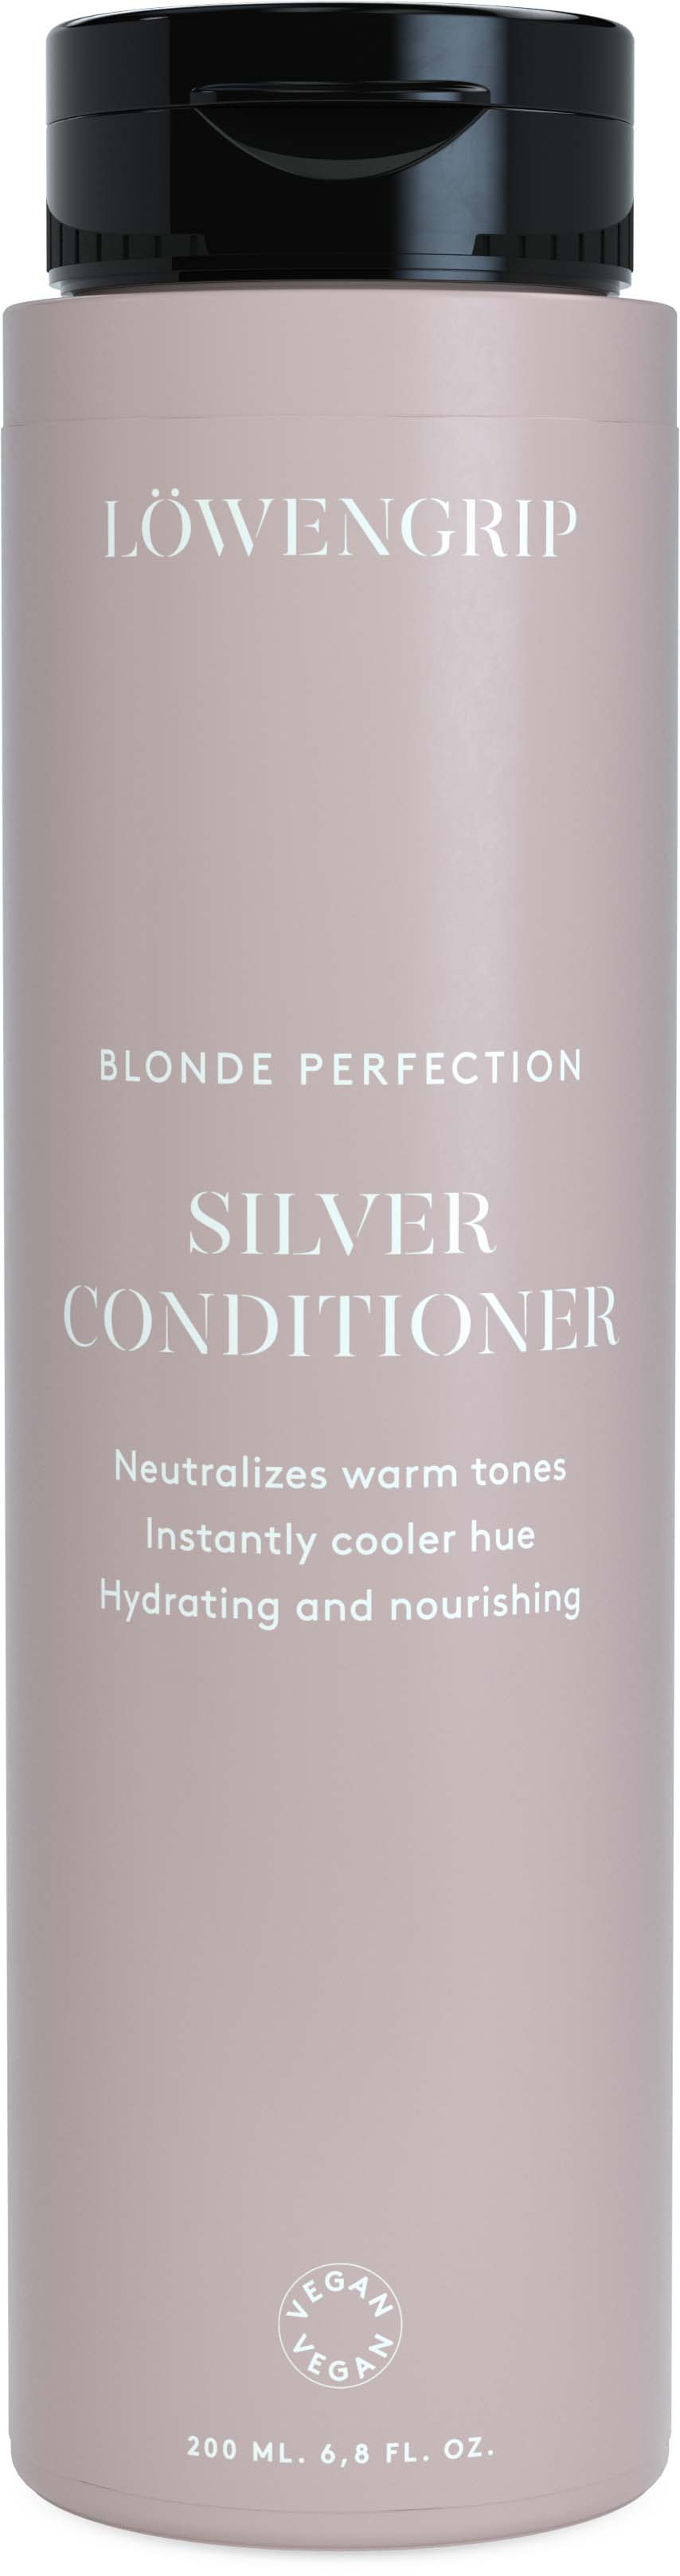 Löwengrip Blonde Perfection Silver Shampoo lyko.com